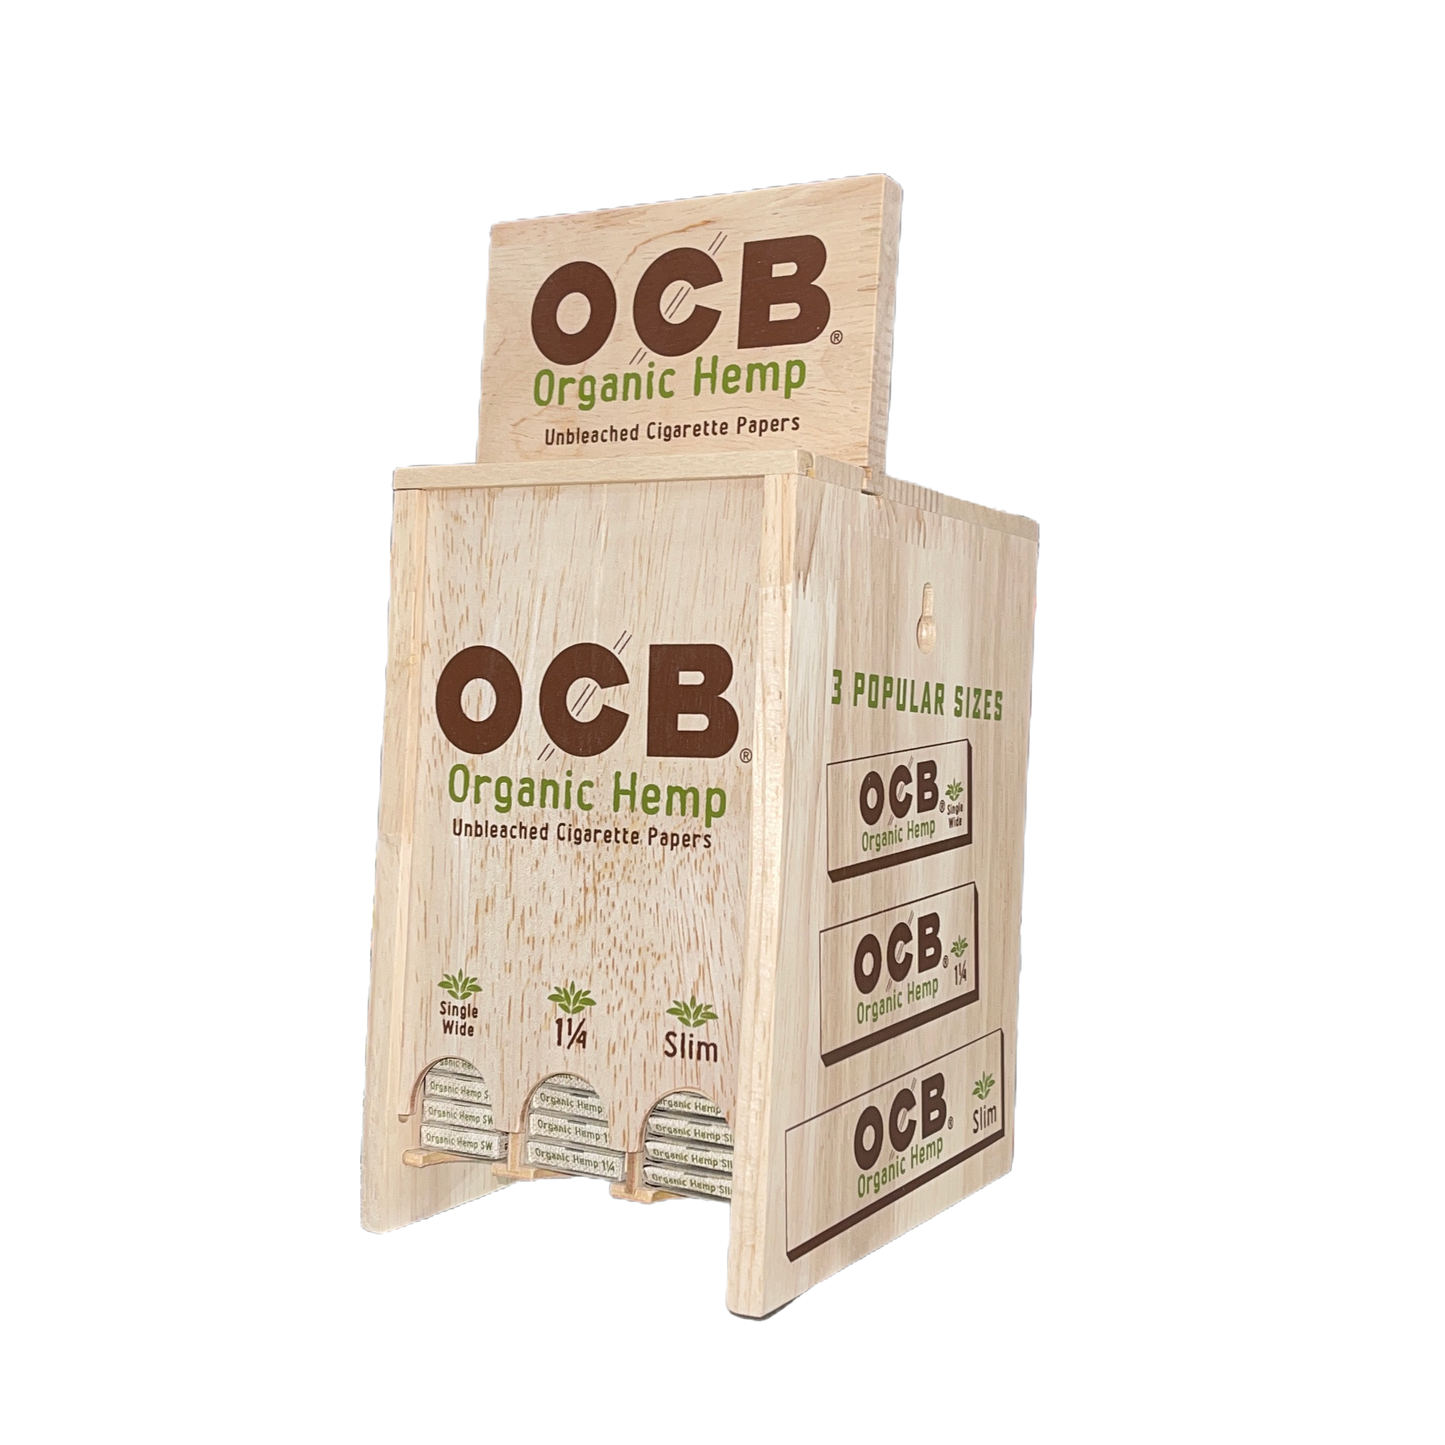 OCB Organic Hemp Wood Box Display